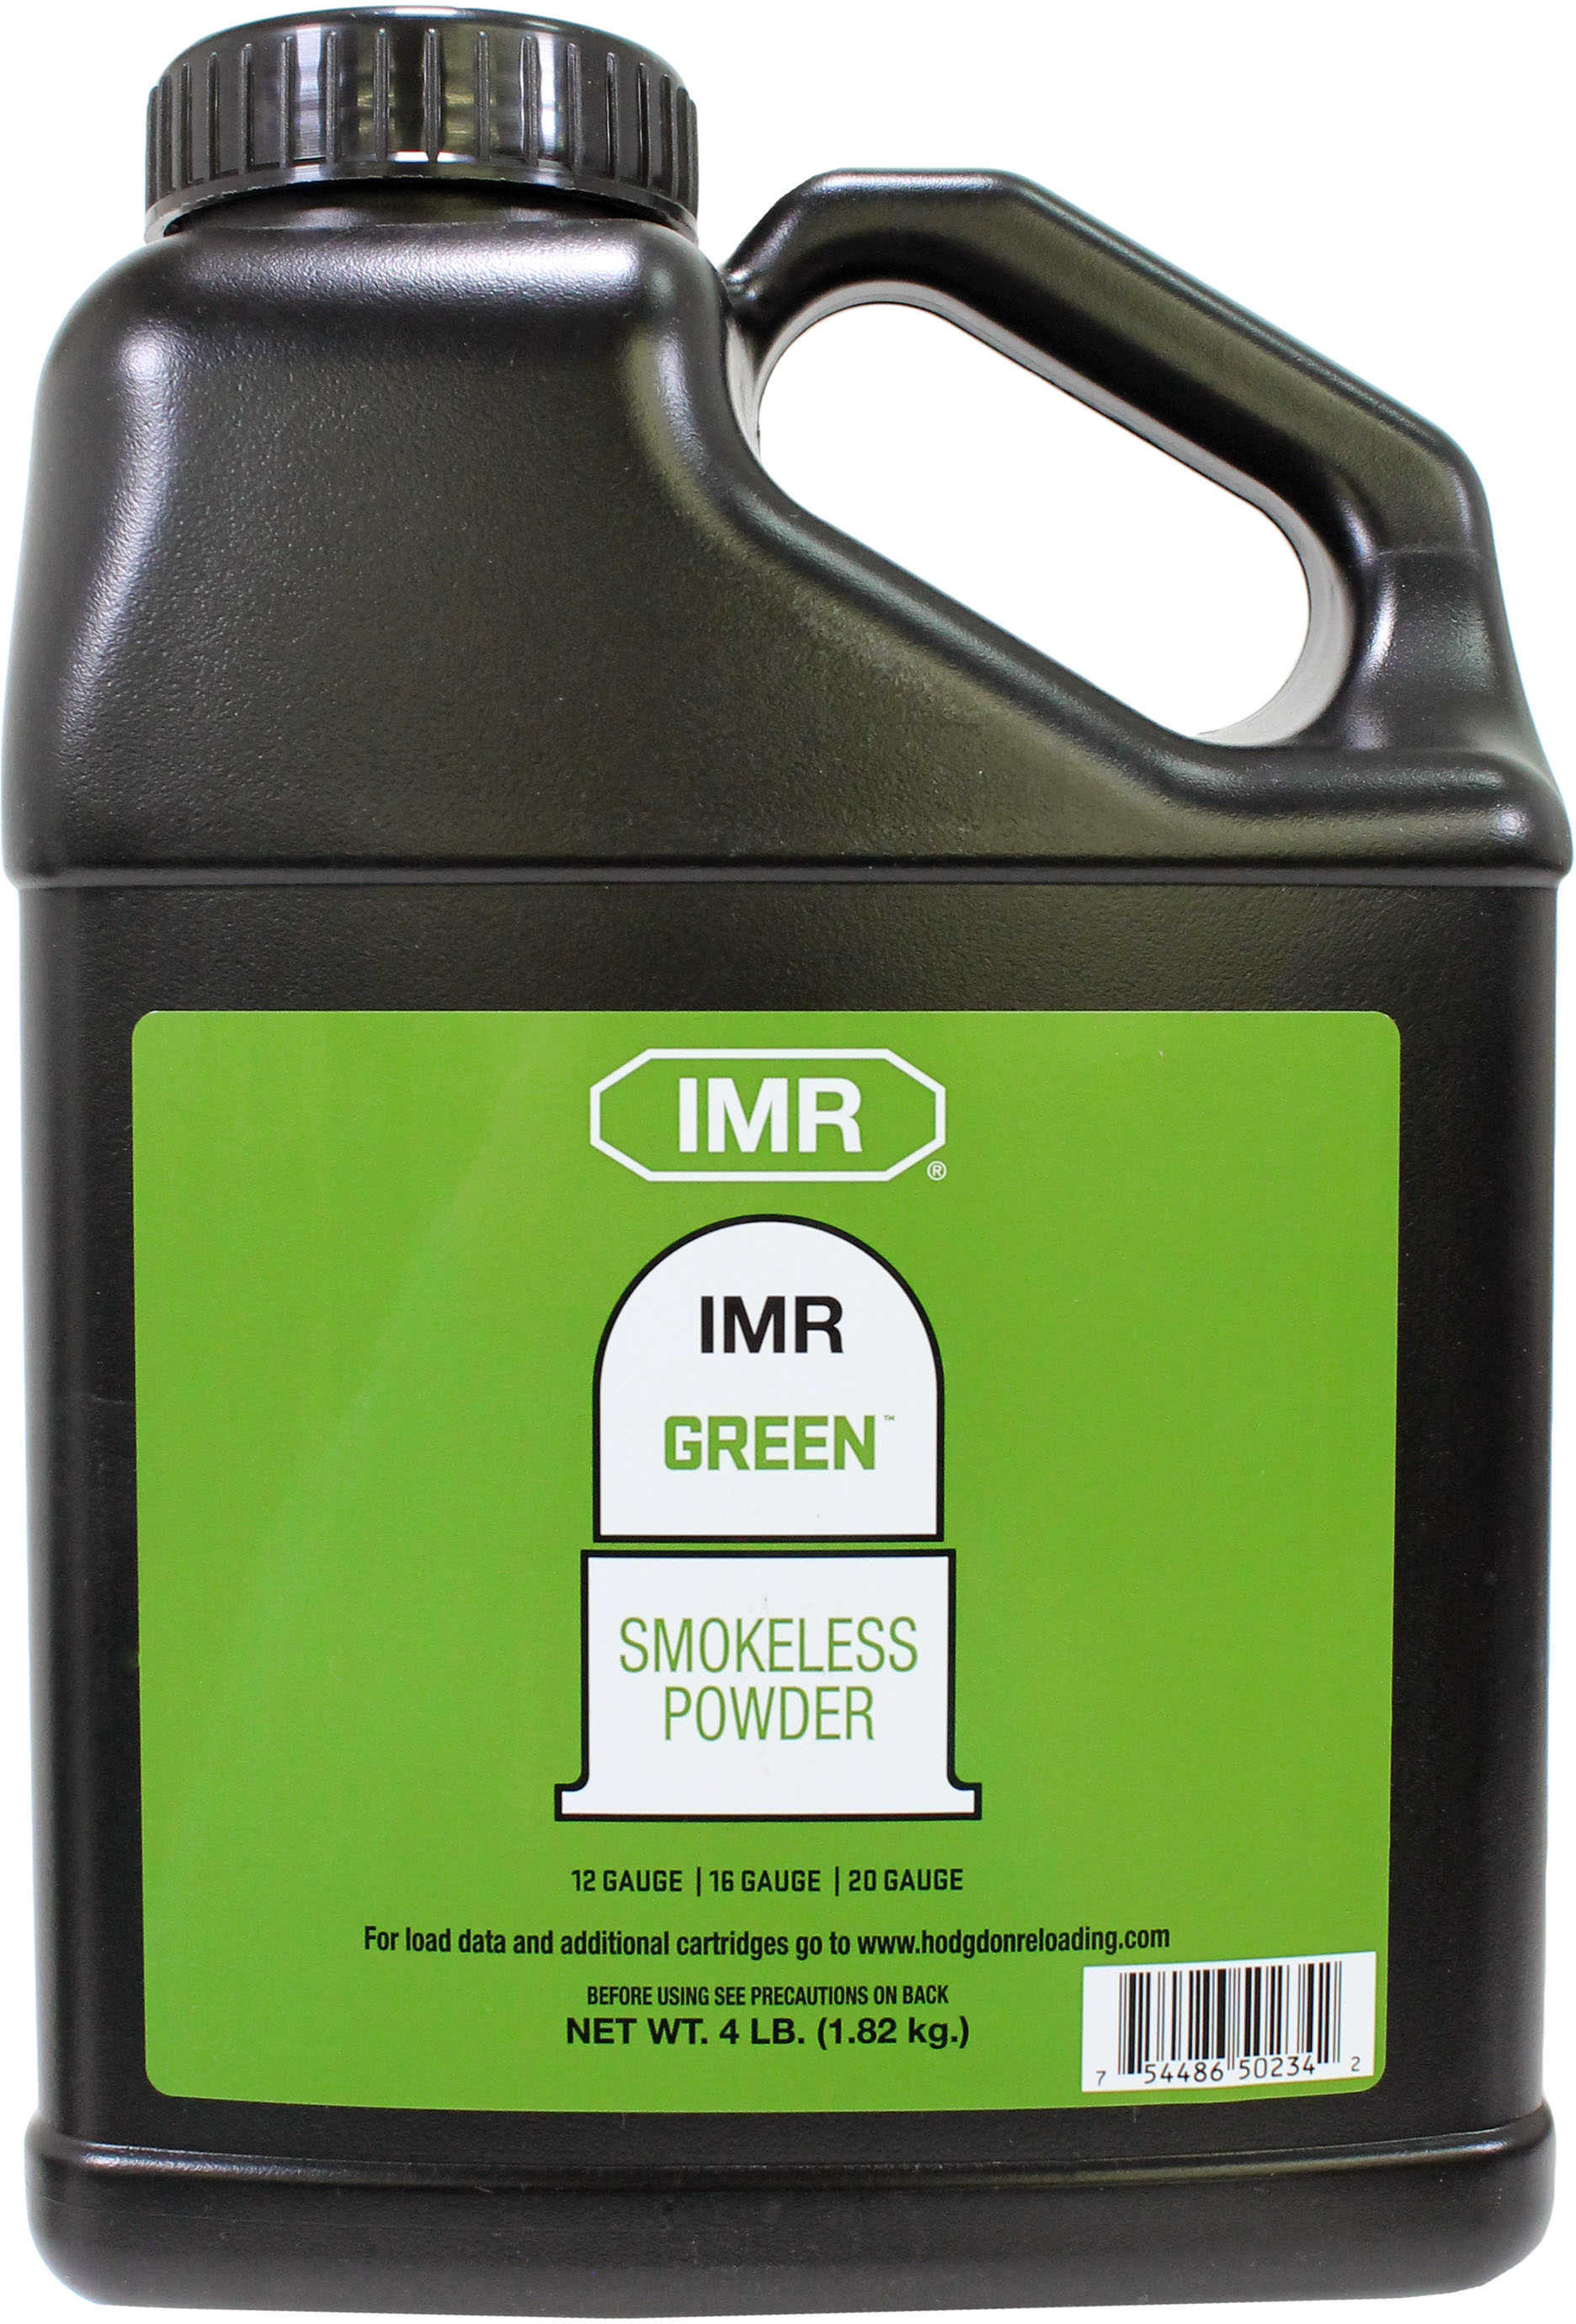 Hodgdon IMR Green Smokeless Powder 4 Lb